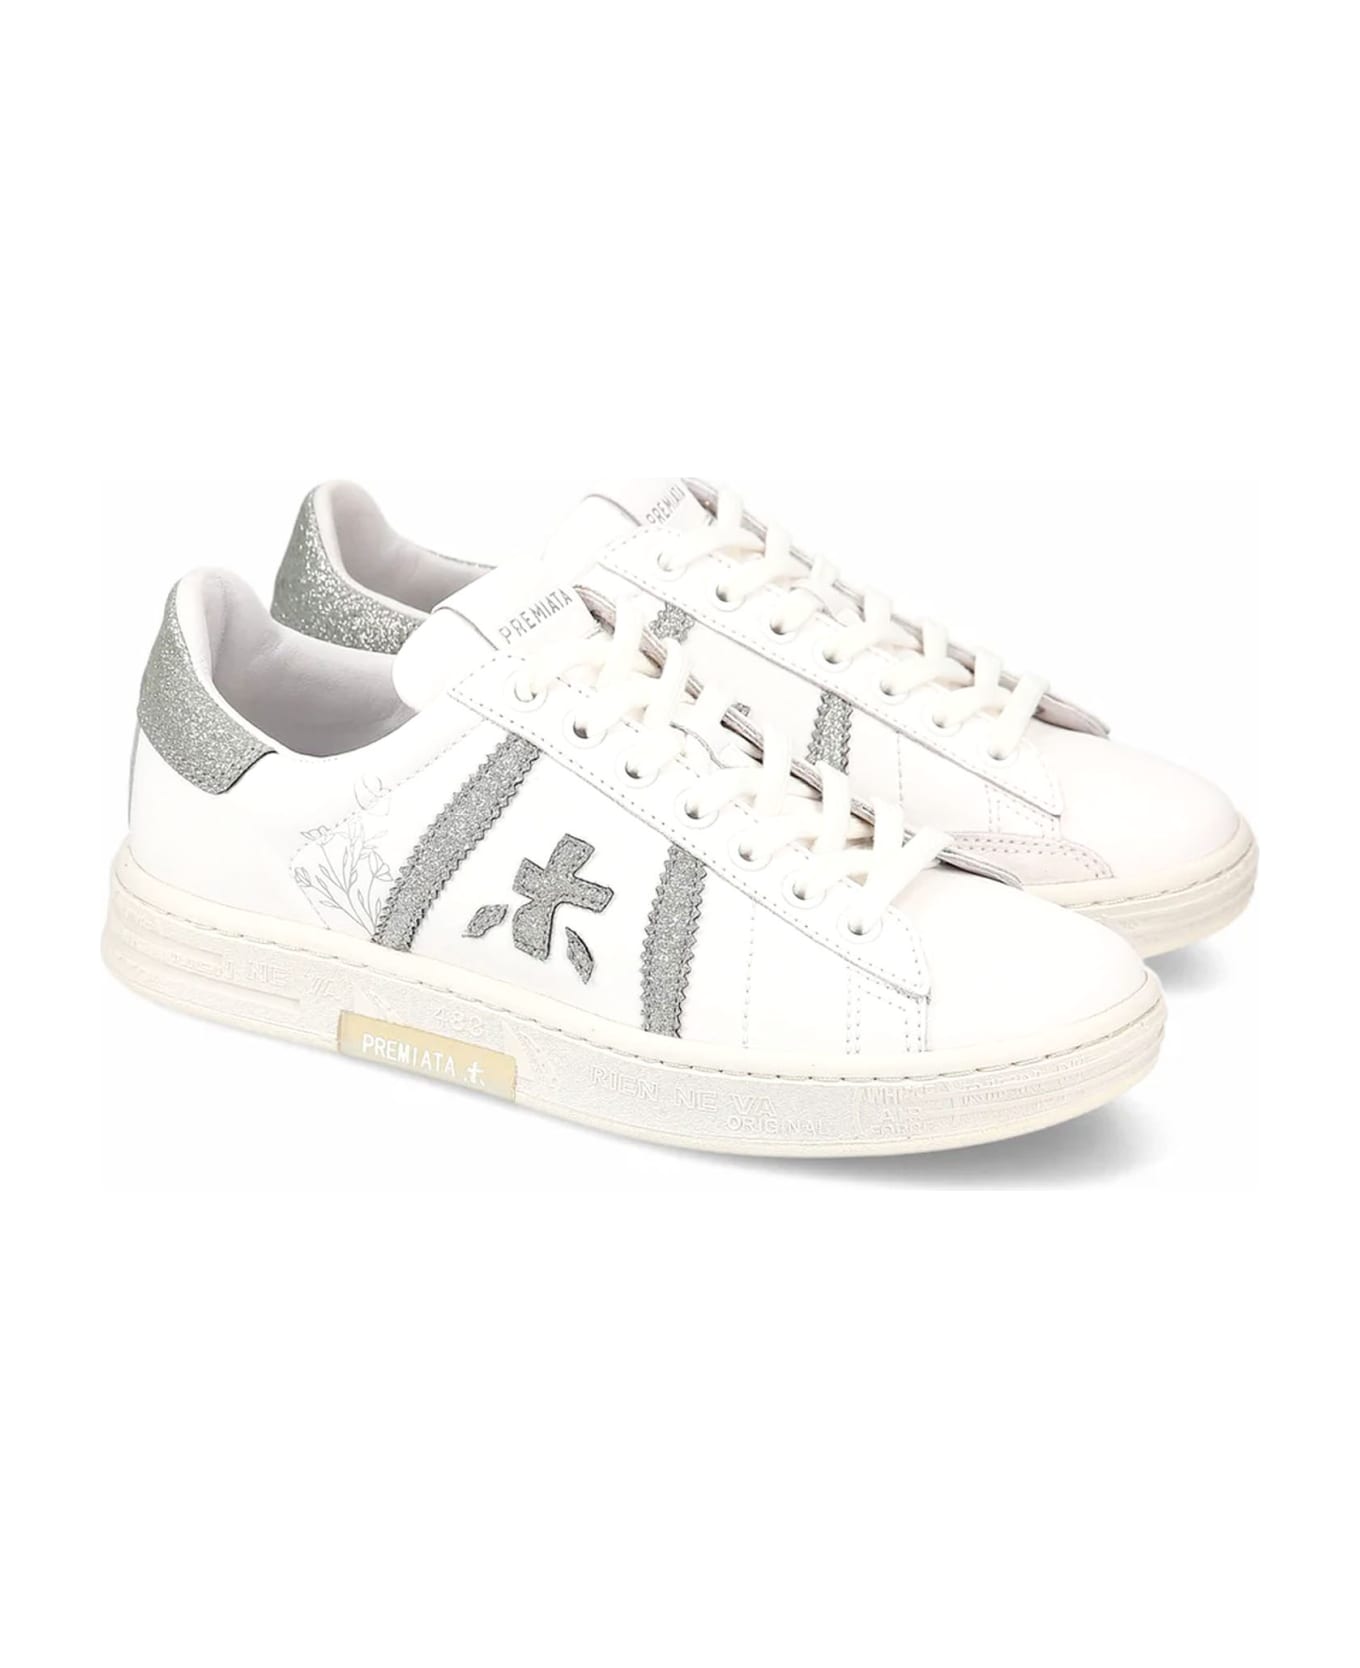 Premiata Sneakers White - Bianco e Argento